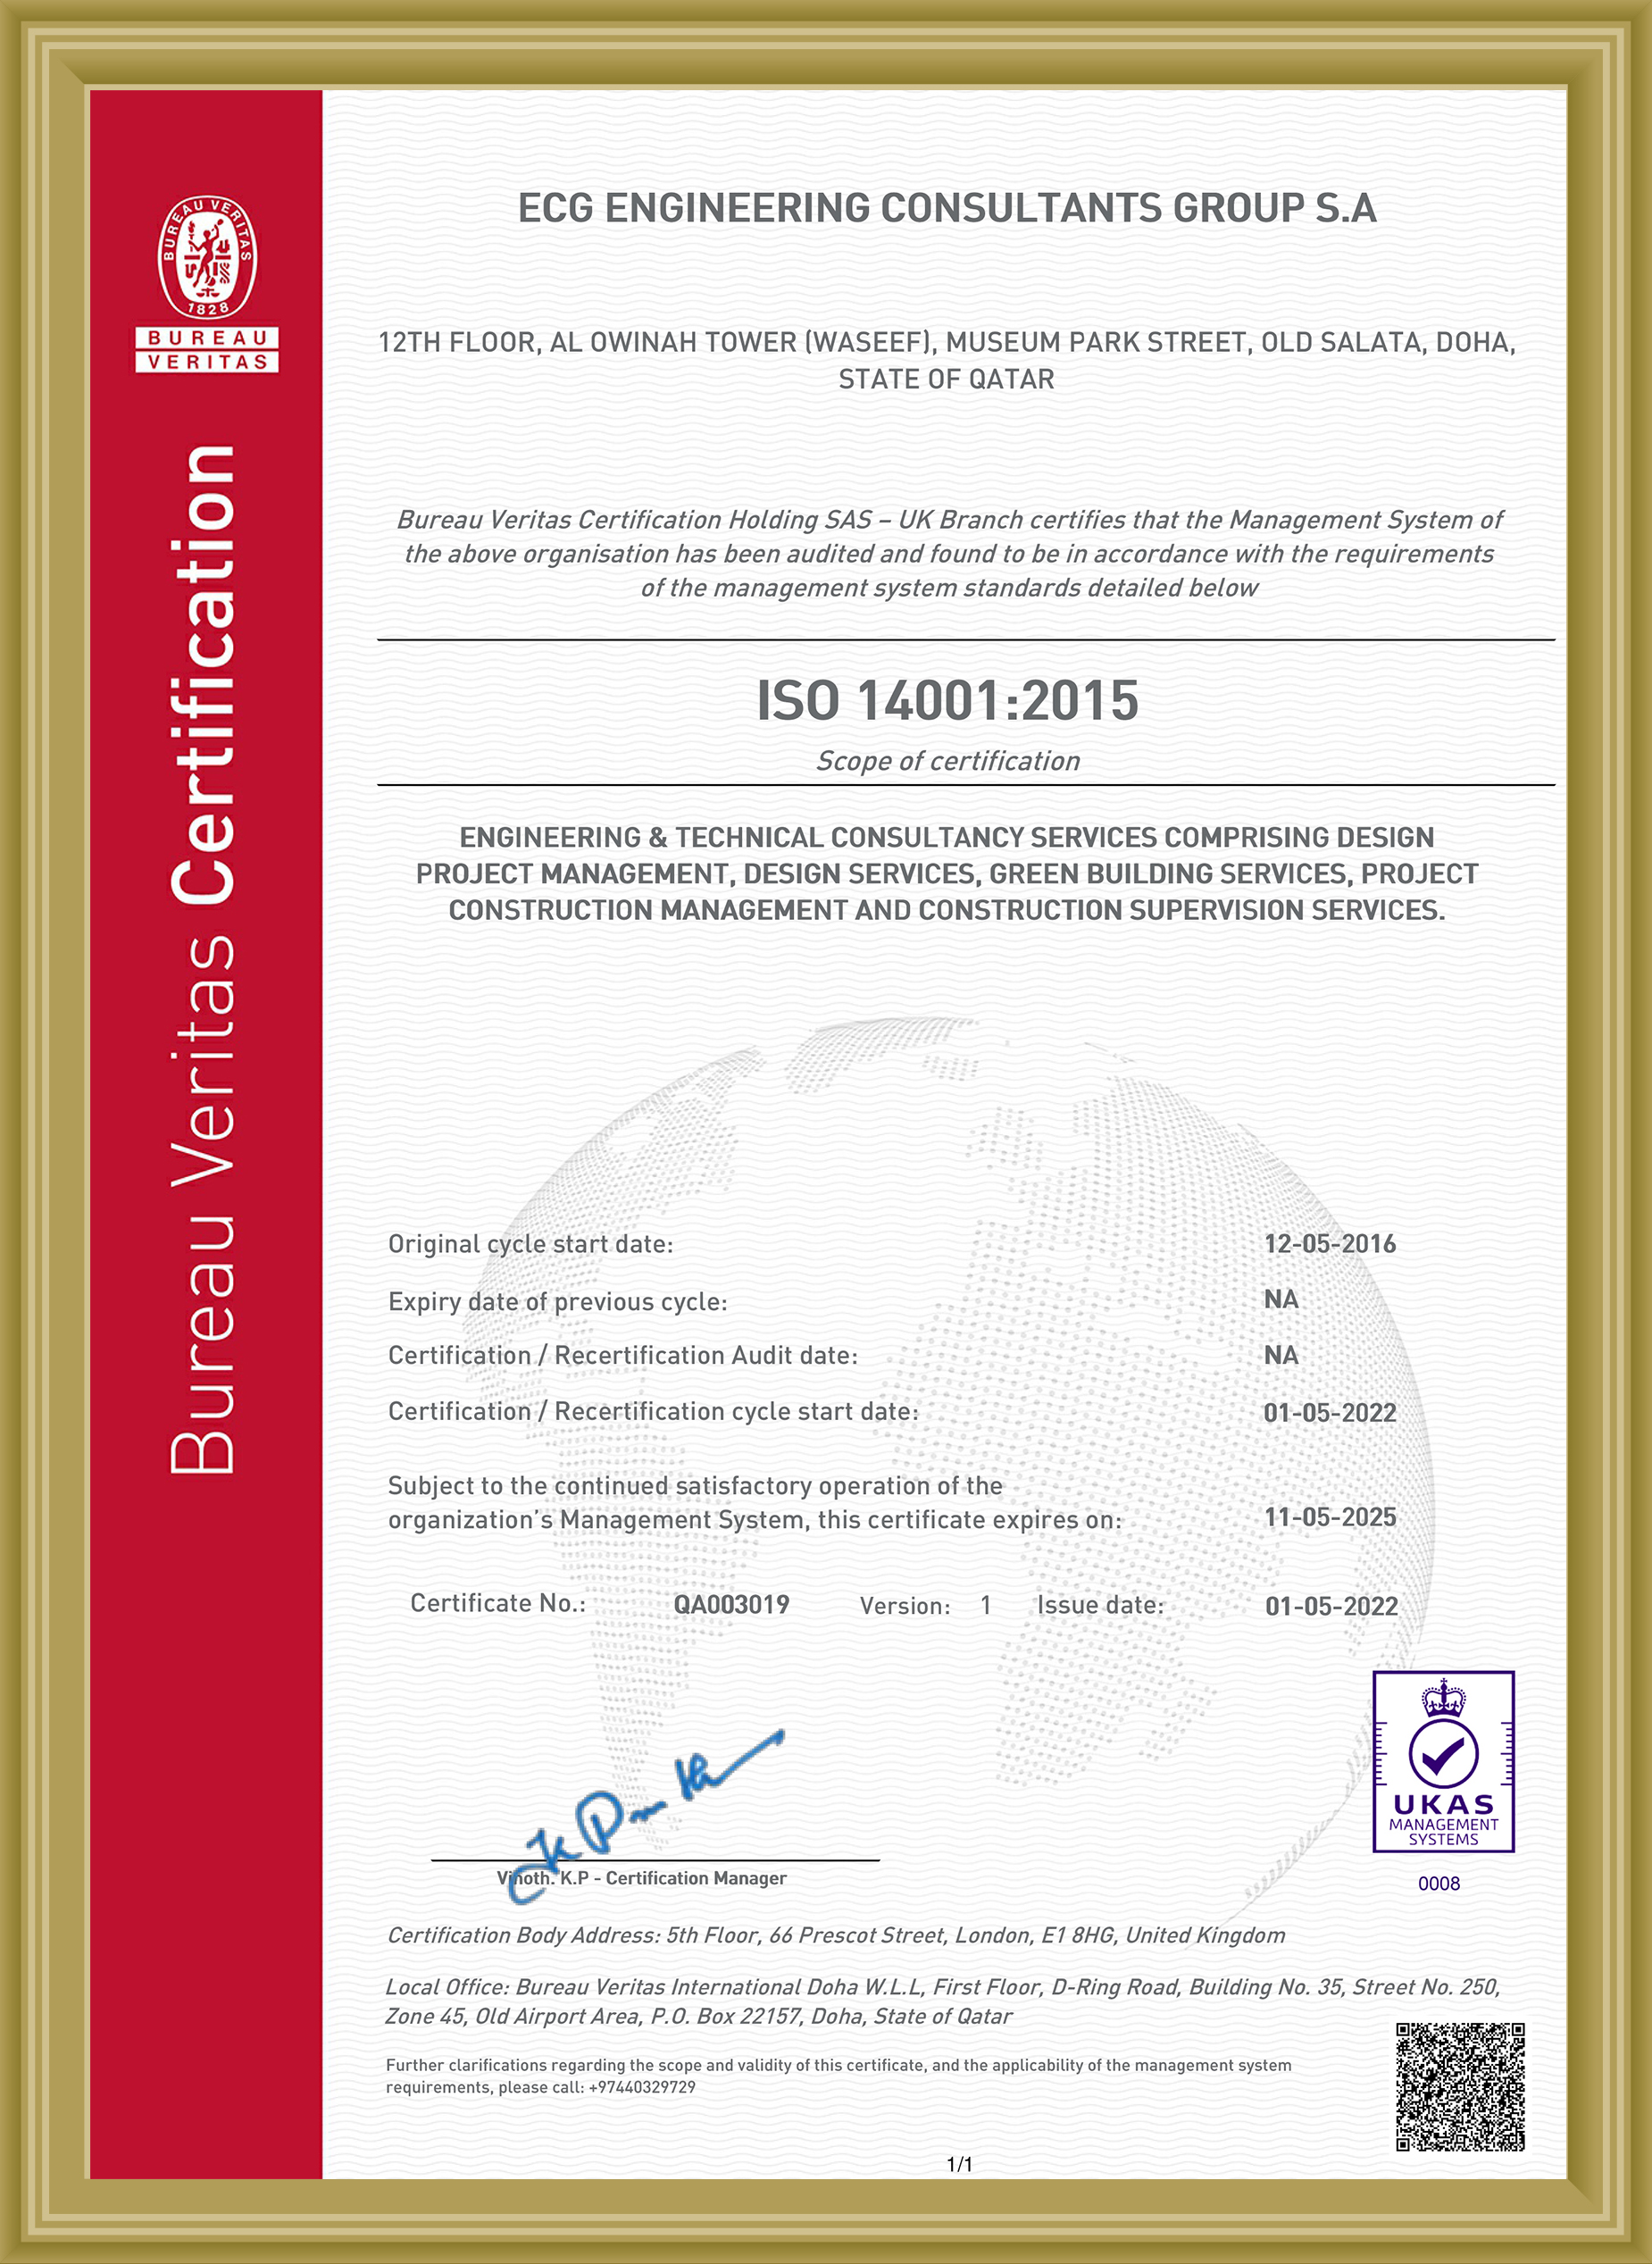 ECG QATAR Certificate ISO 14001 2015